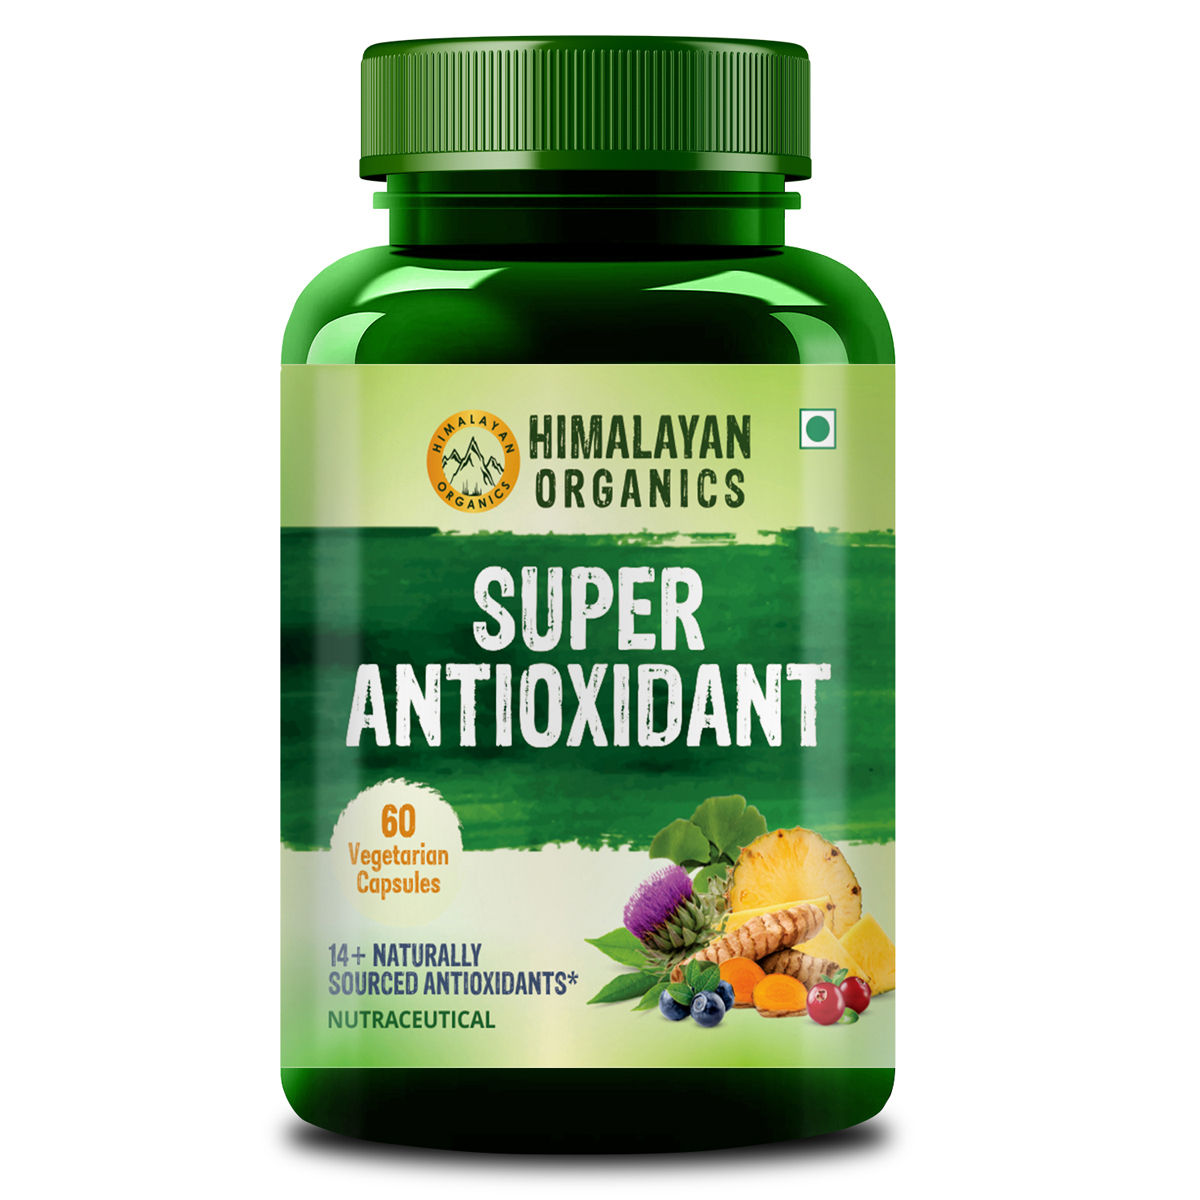 Buy Himalayan Organics Super Antioxidant, 60 Capsules Online